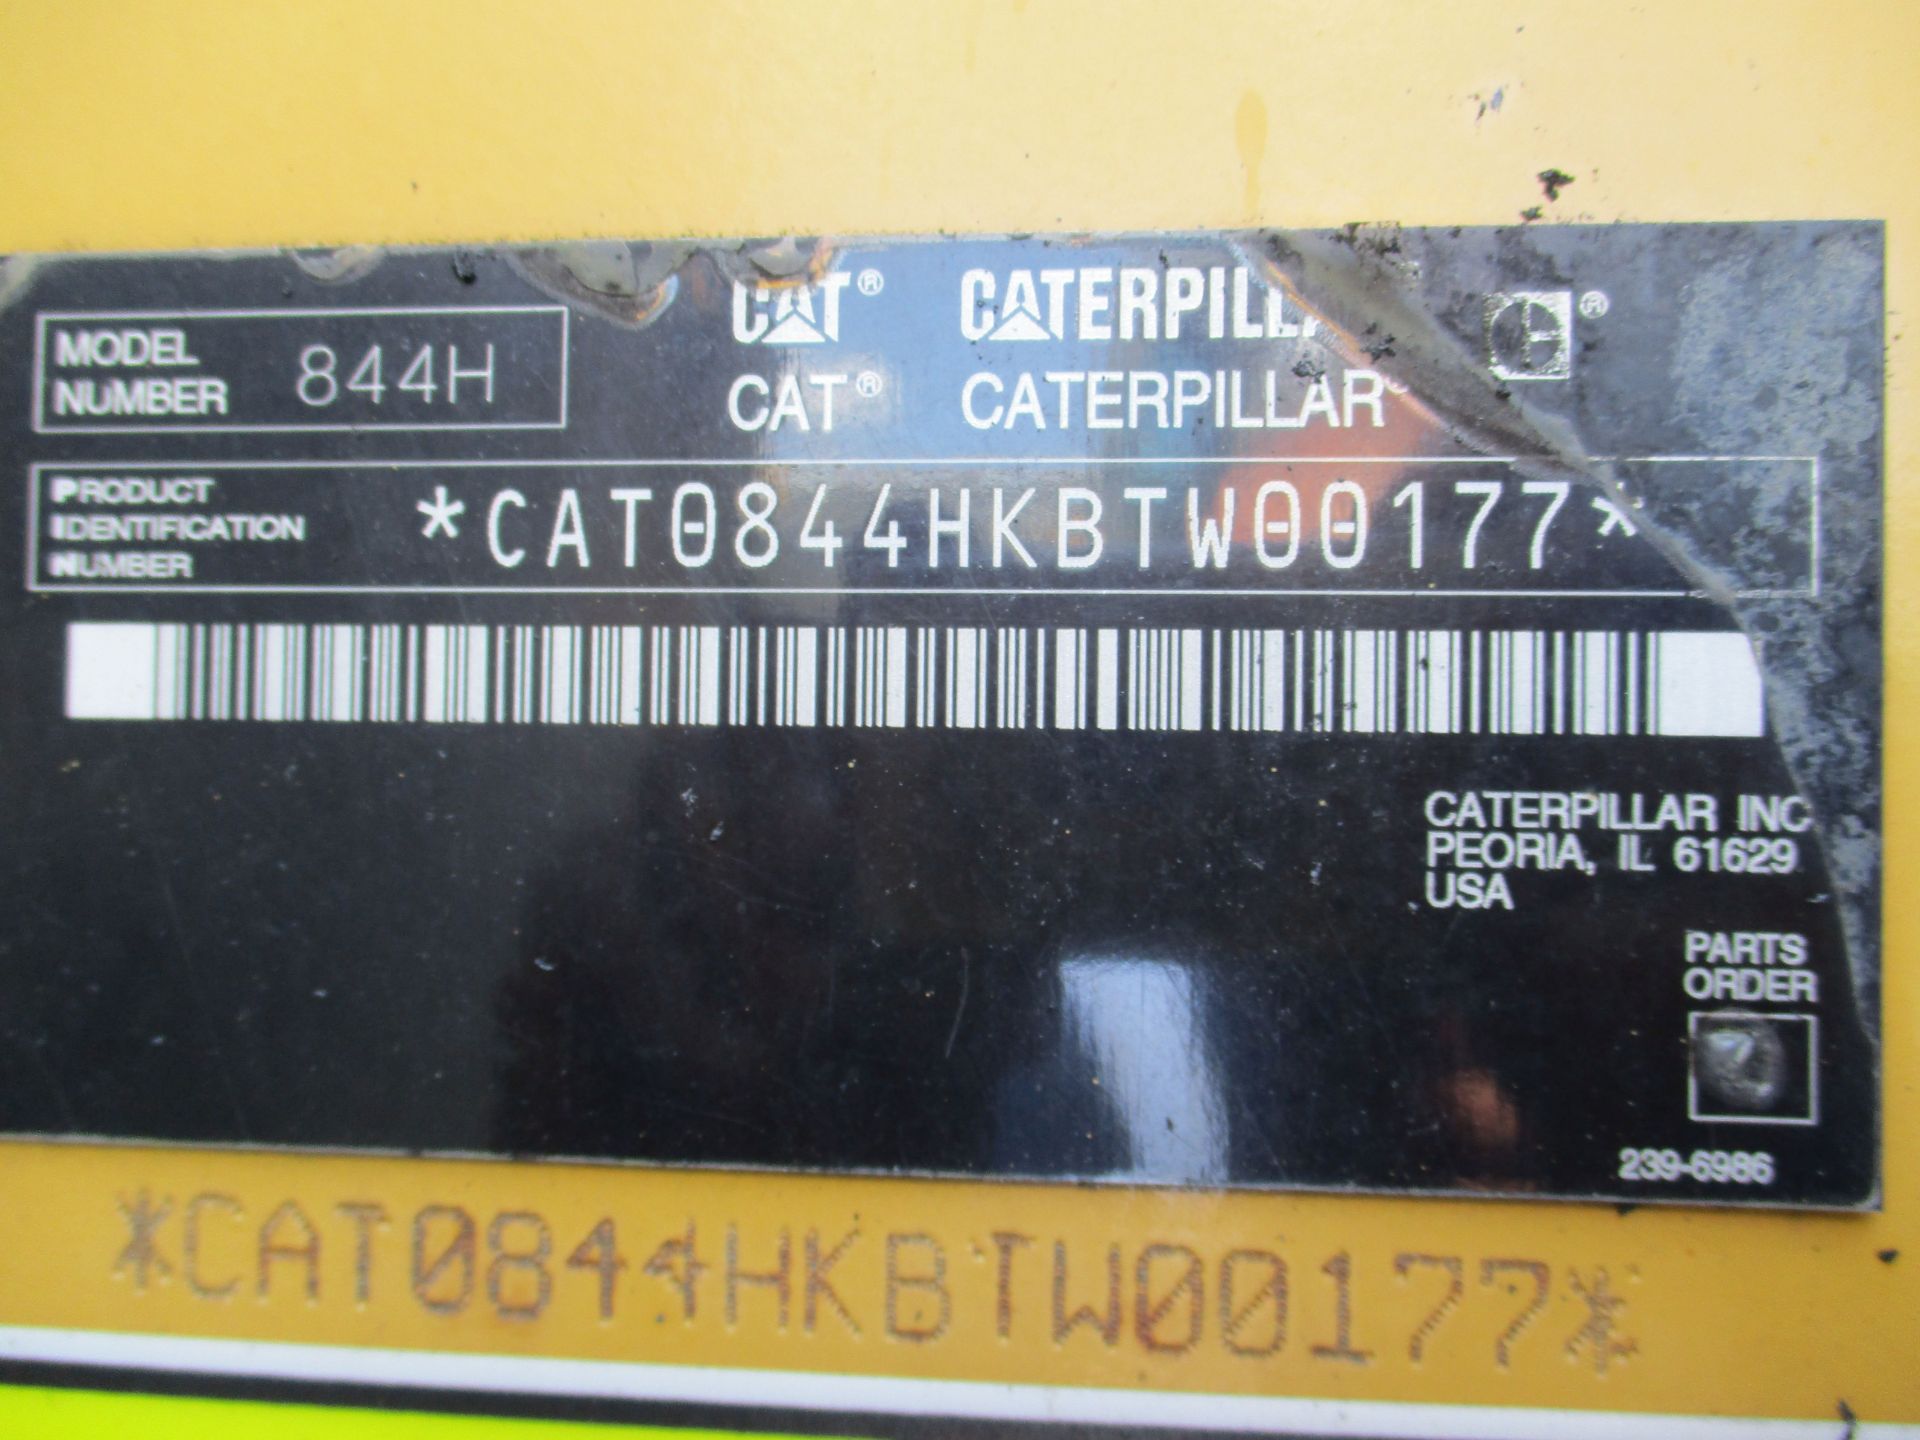 CATERPILLAR MODEL 844H 4-WHEEL DRIVE ARTICULATING RUBBER TIRE DOZER; S/N CAT0844HKBTW00177, 45/65- - Image 7 of 9